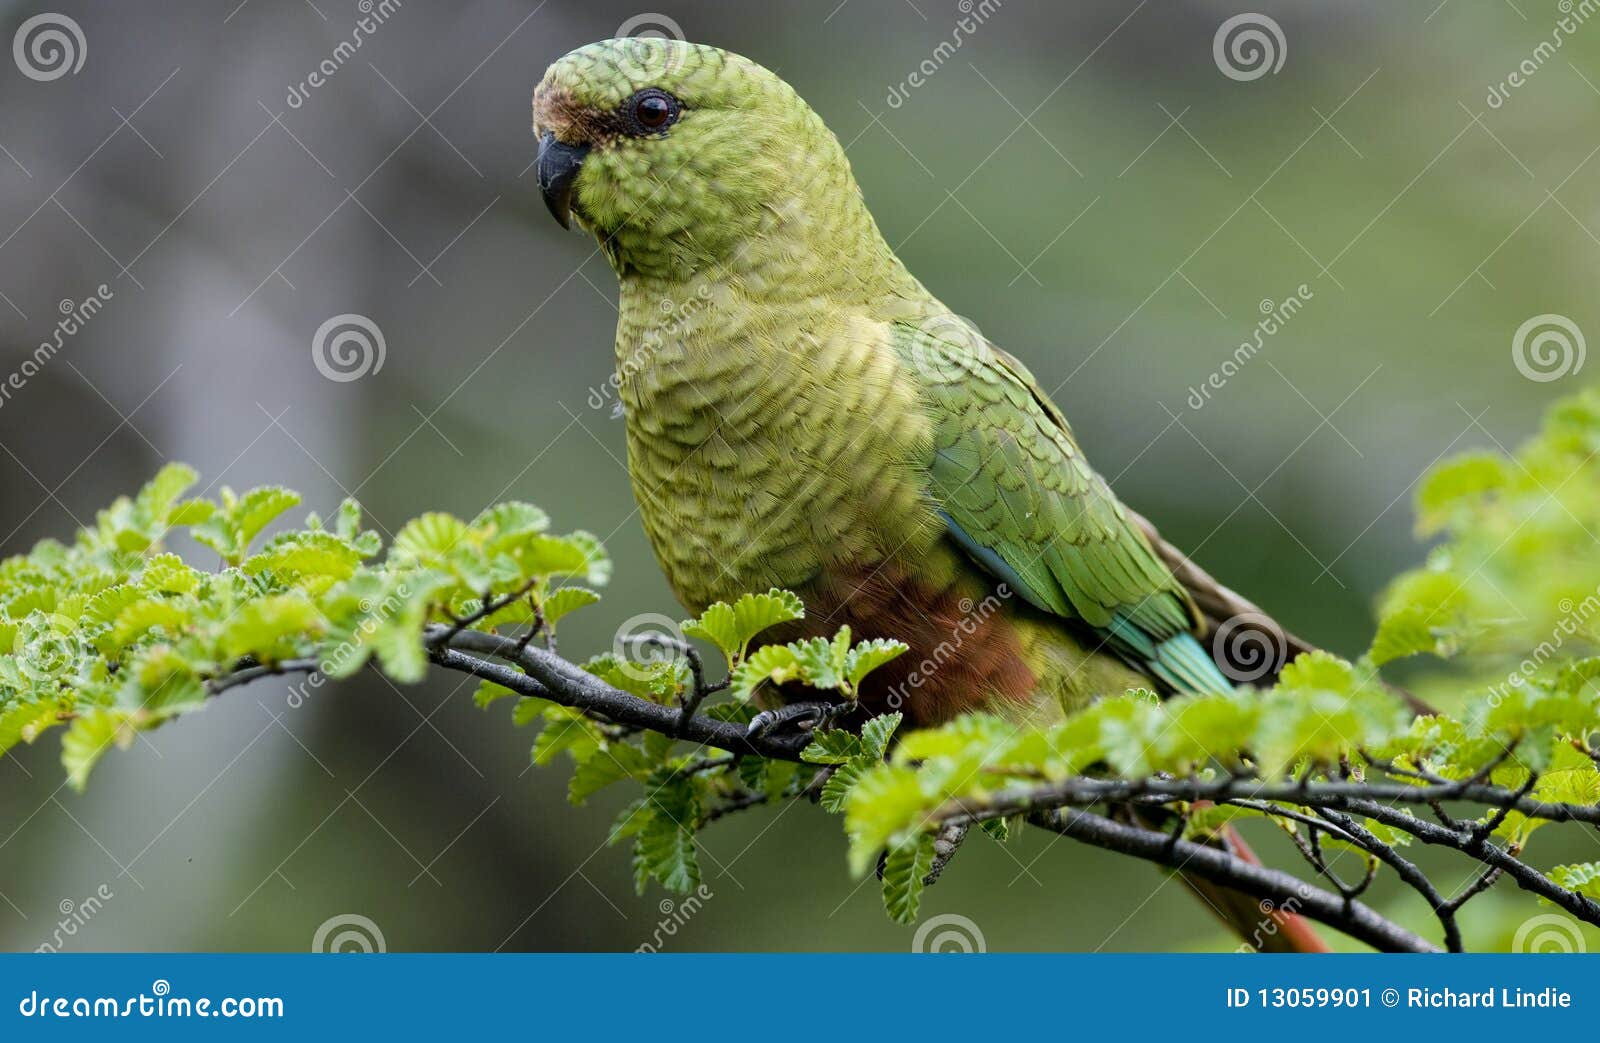 austral parakeet